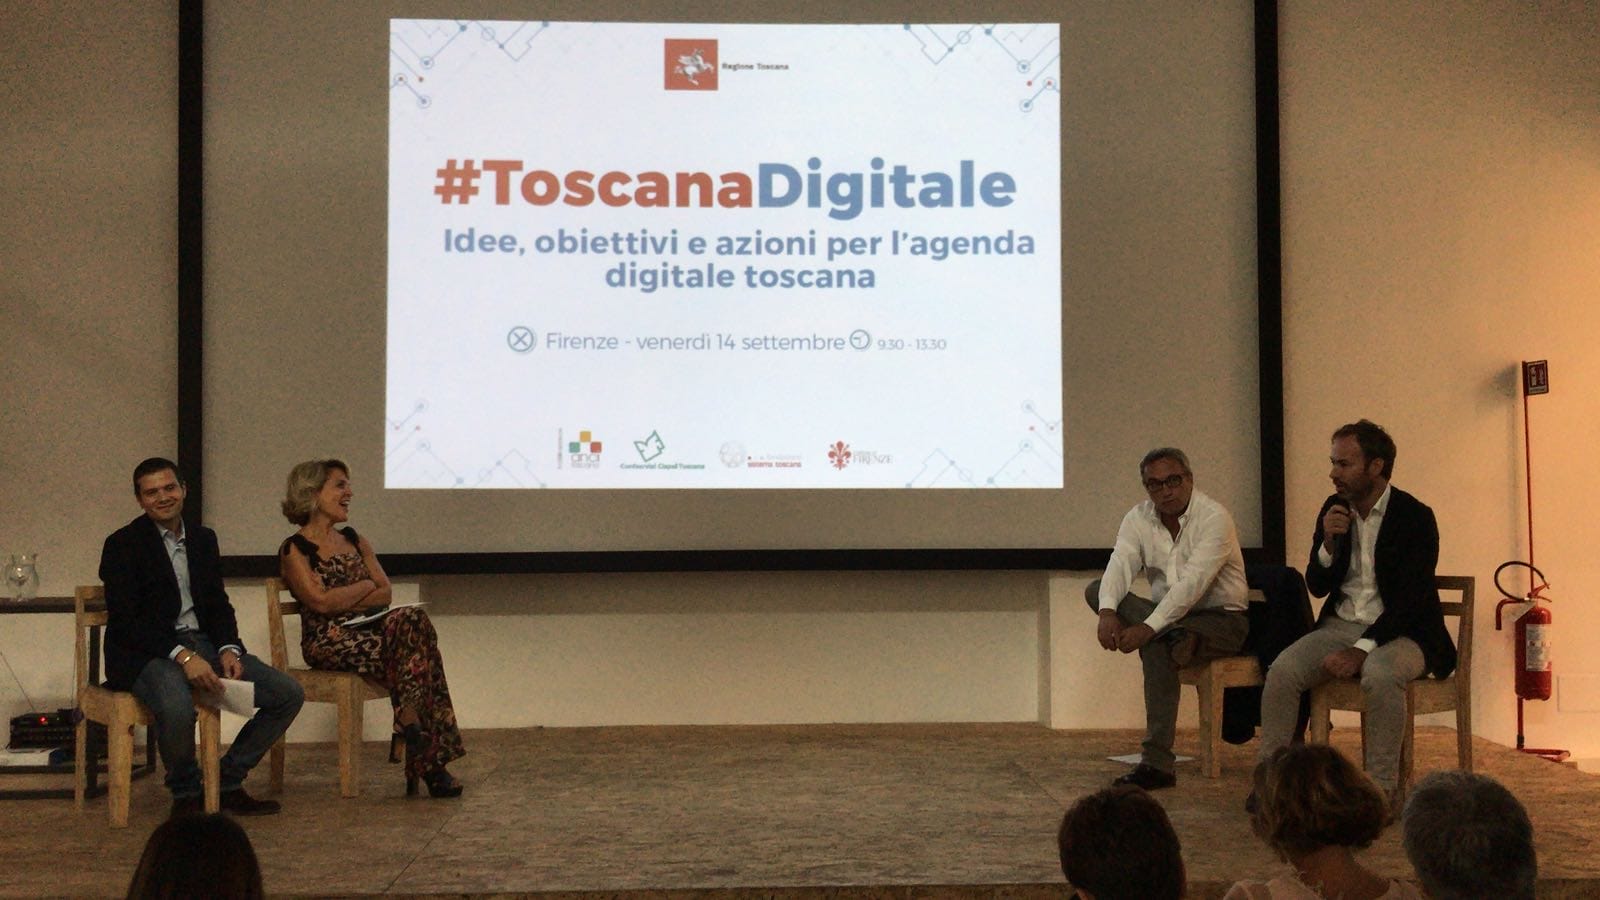 Toscana digitale